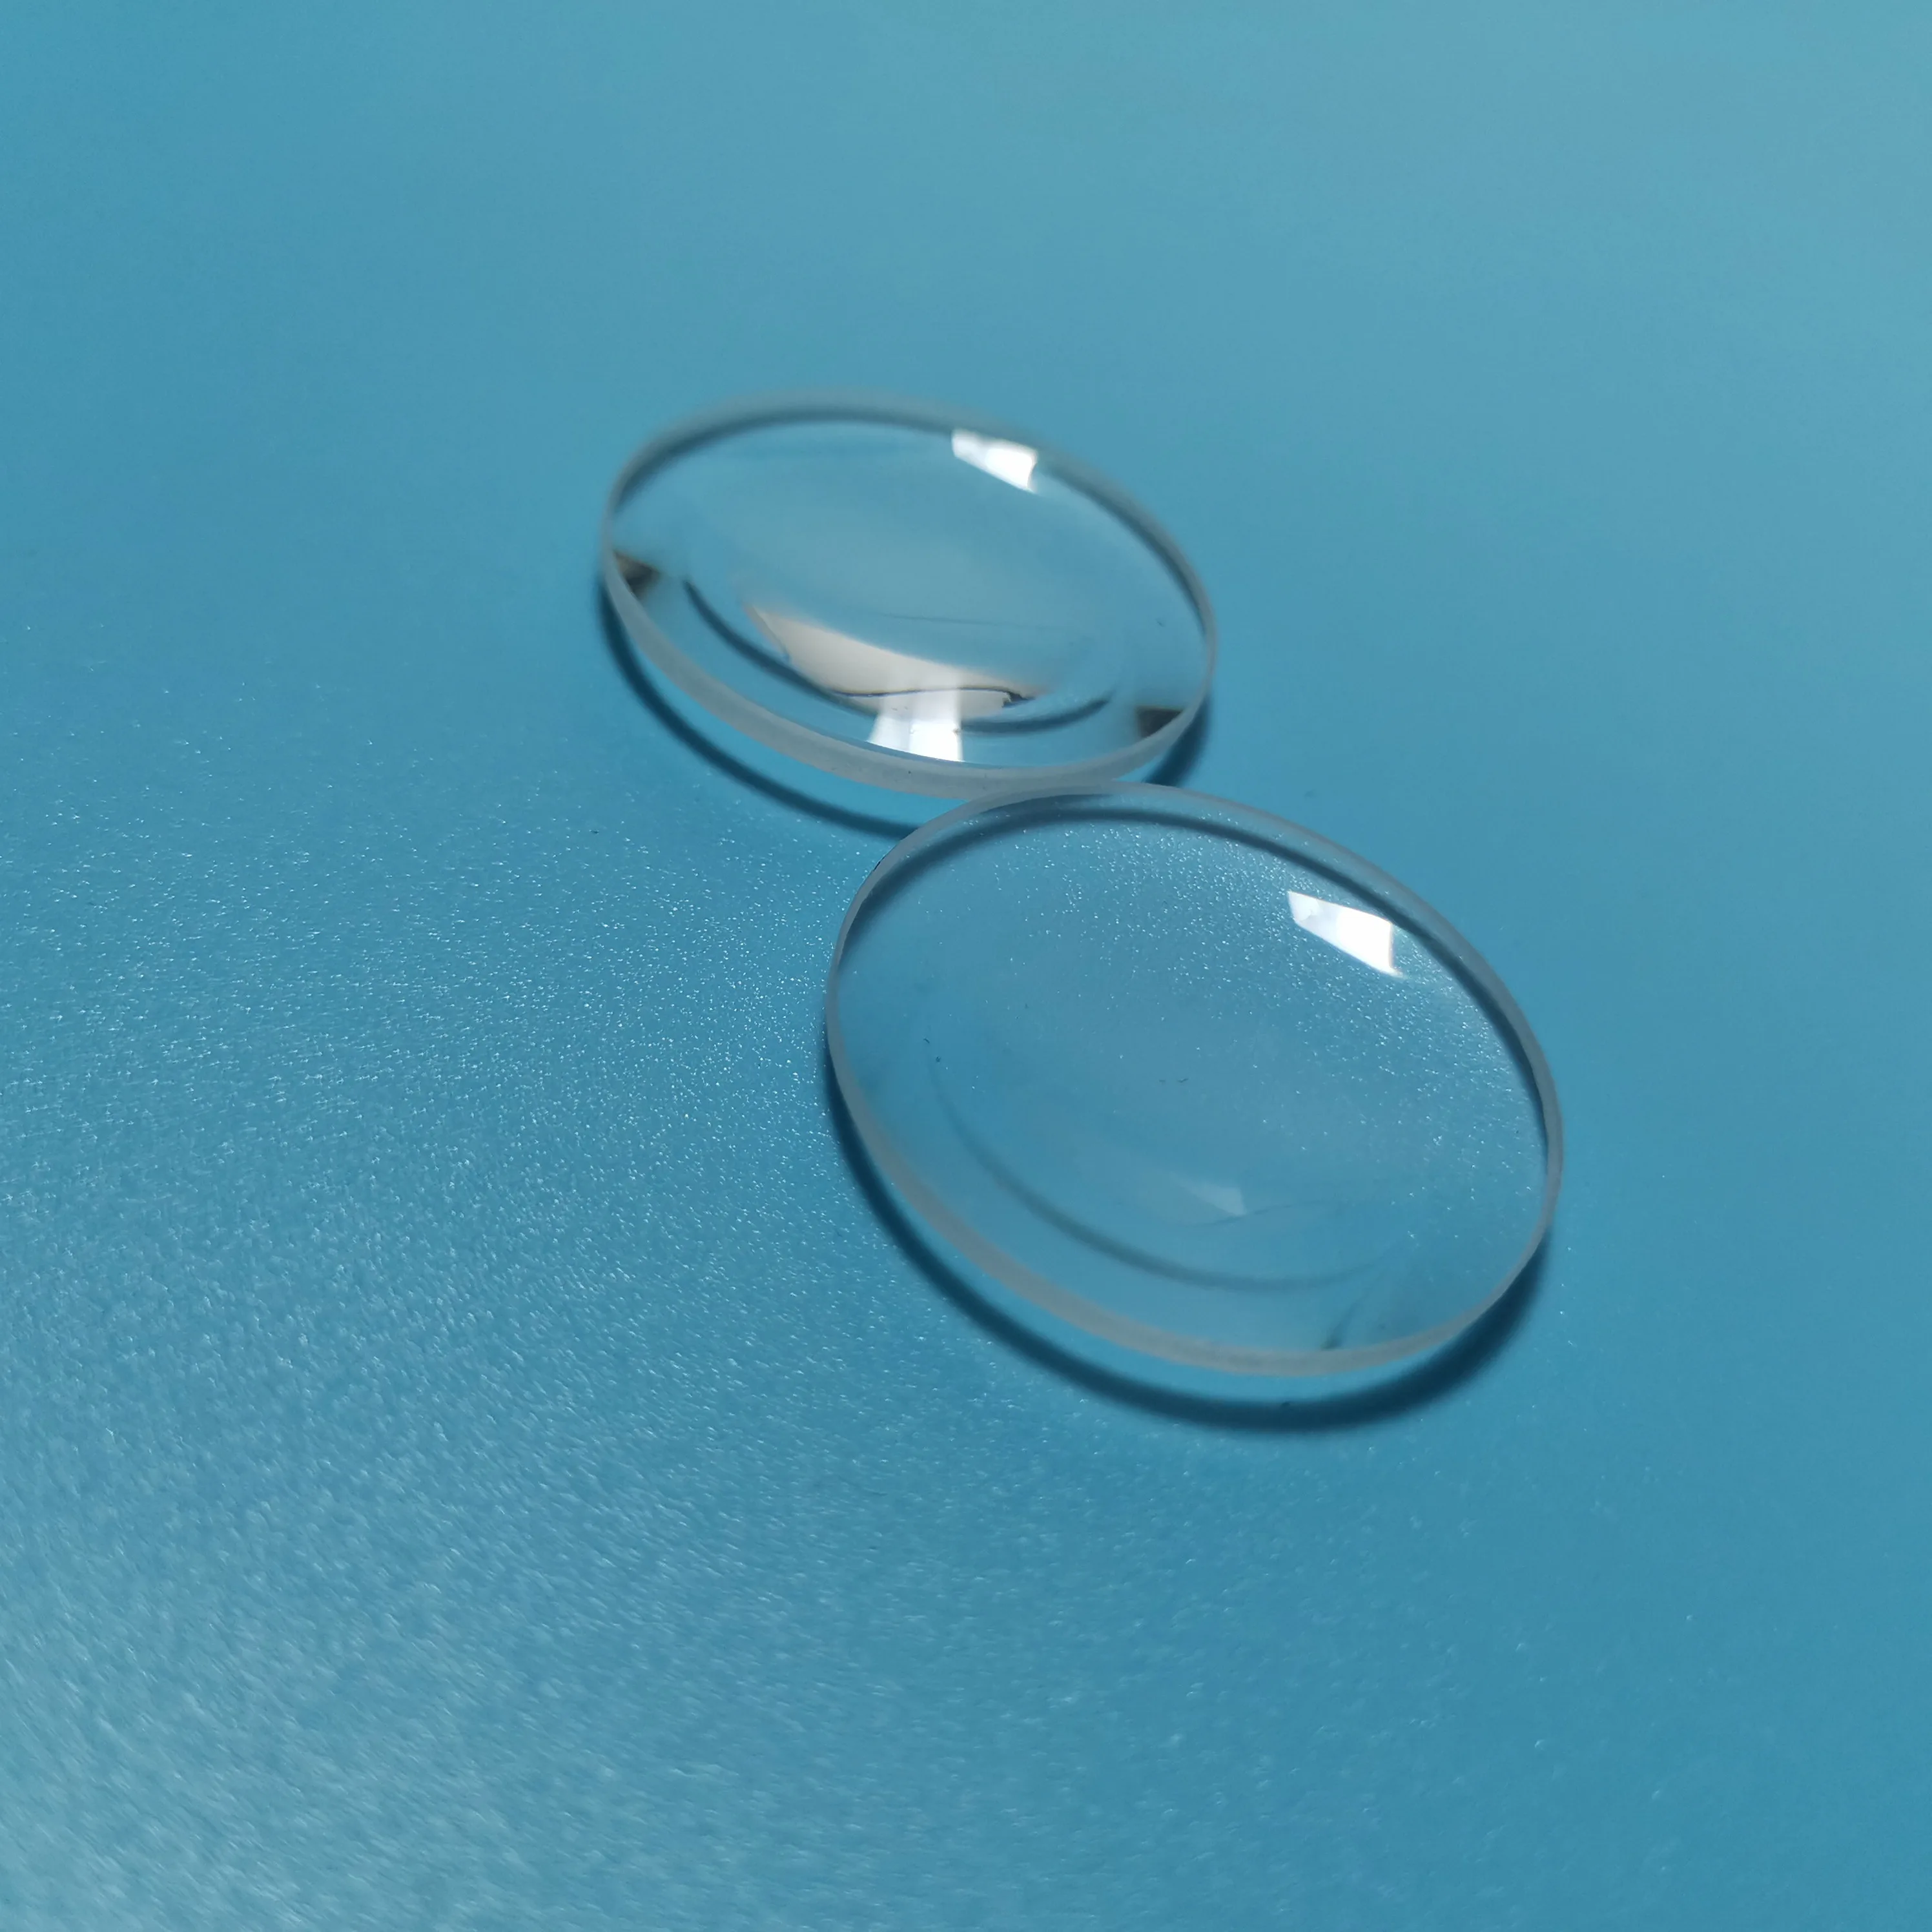 Magnifier Lens Optical K9 Lenticular Lenes glass 5 Times Magnifier Diameter 25mm Focal Length 50mm for experiment